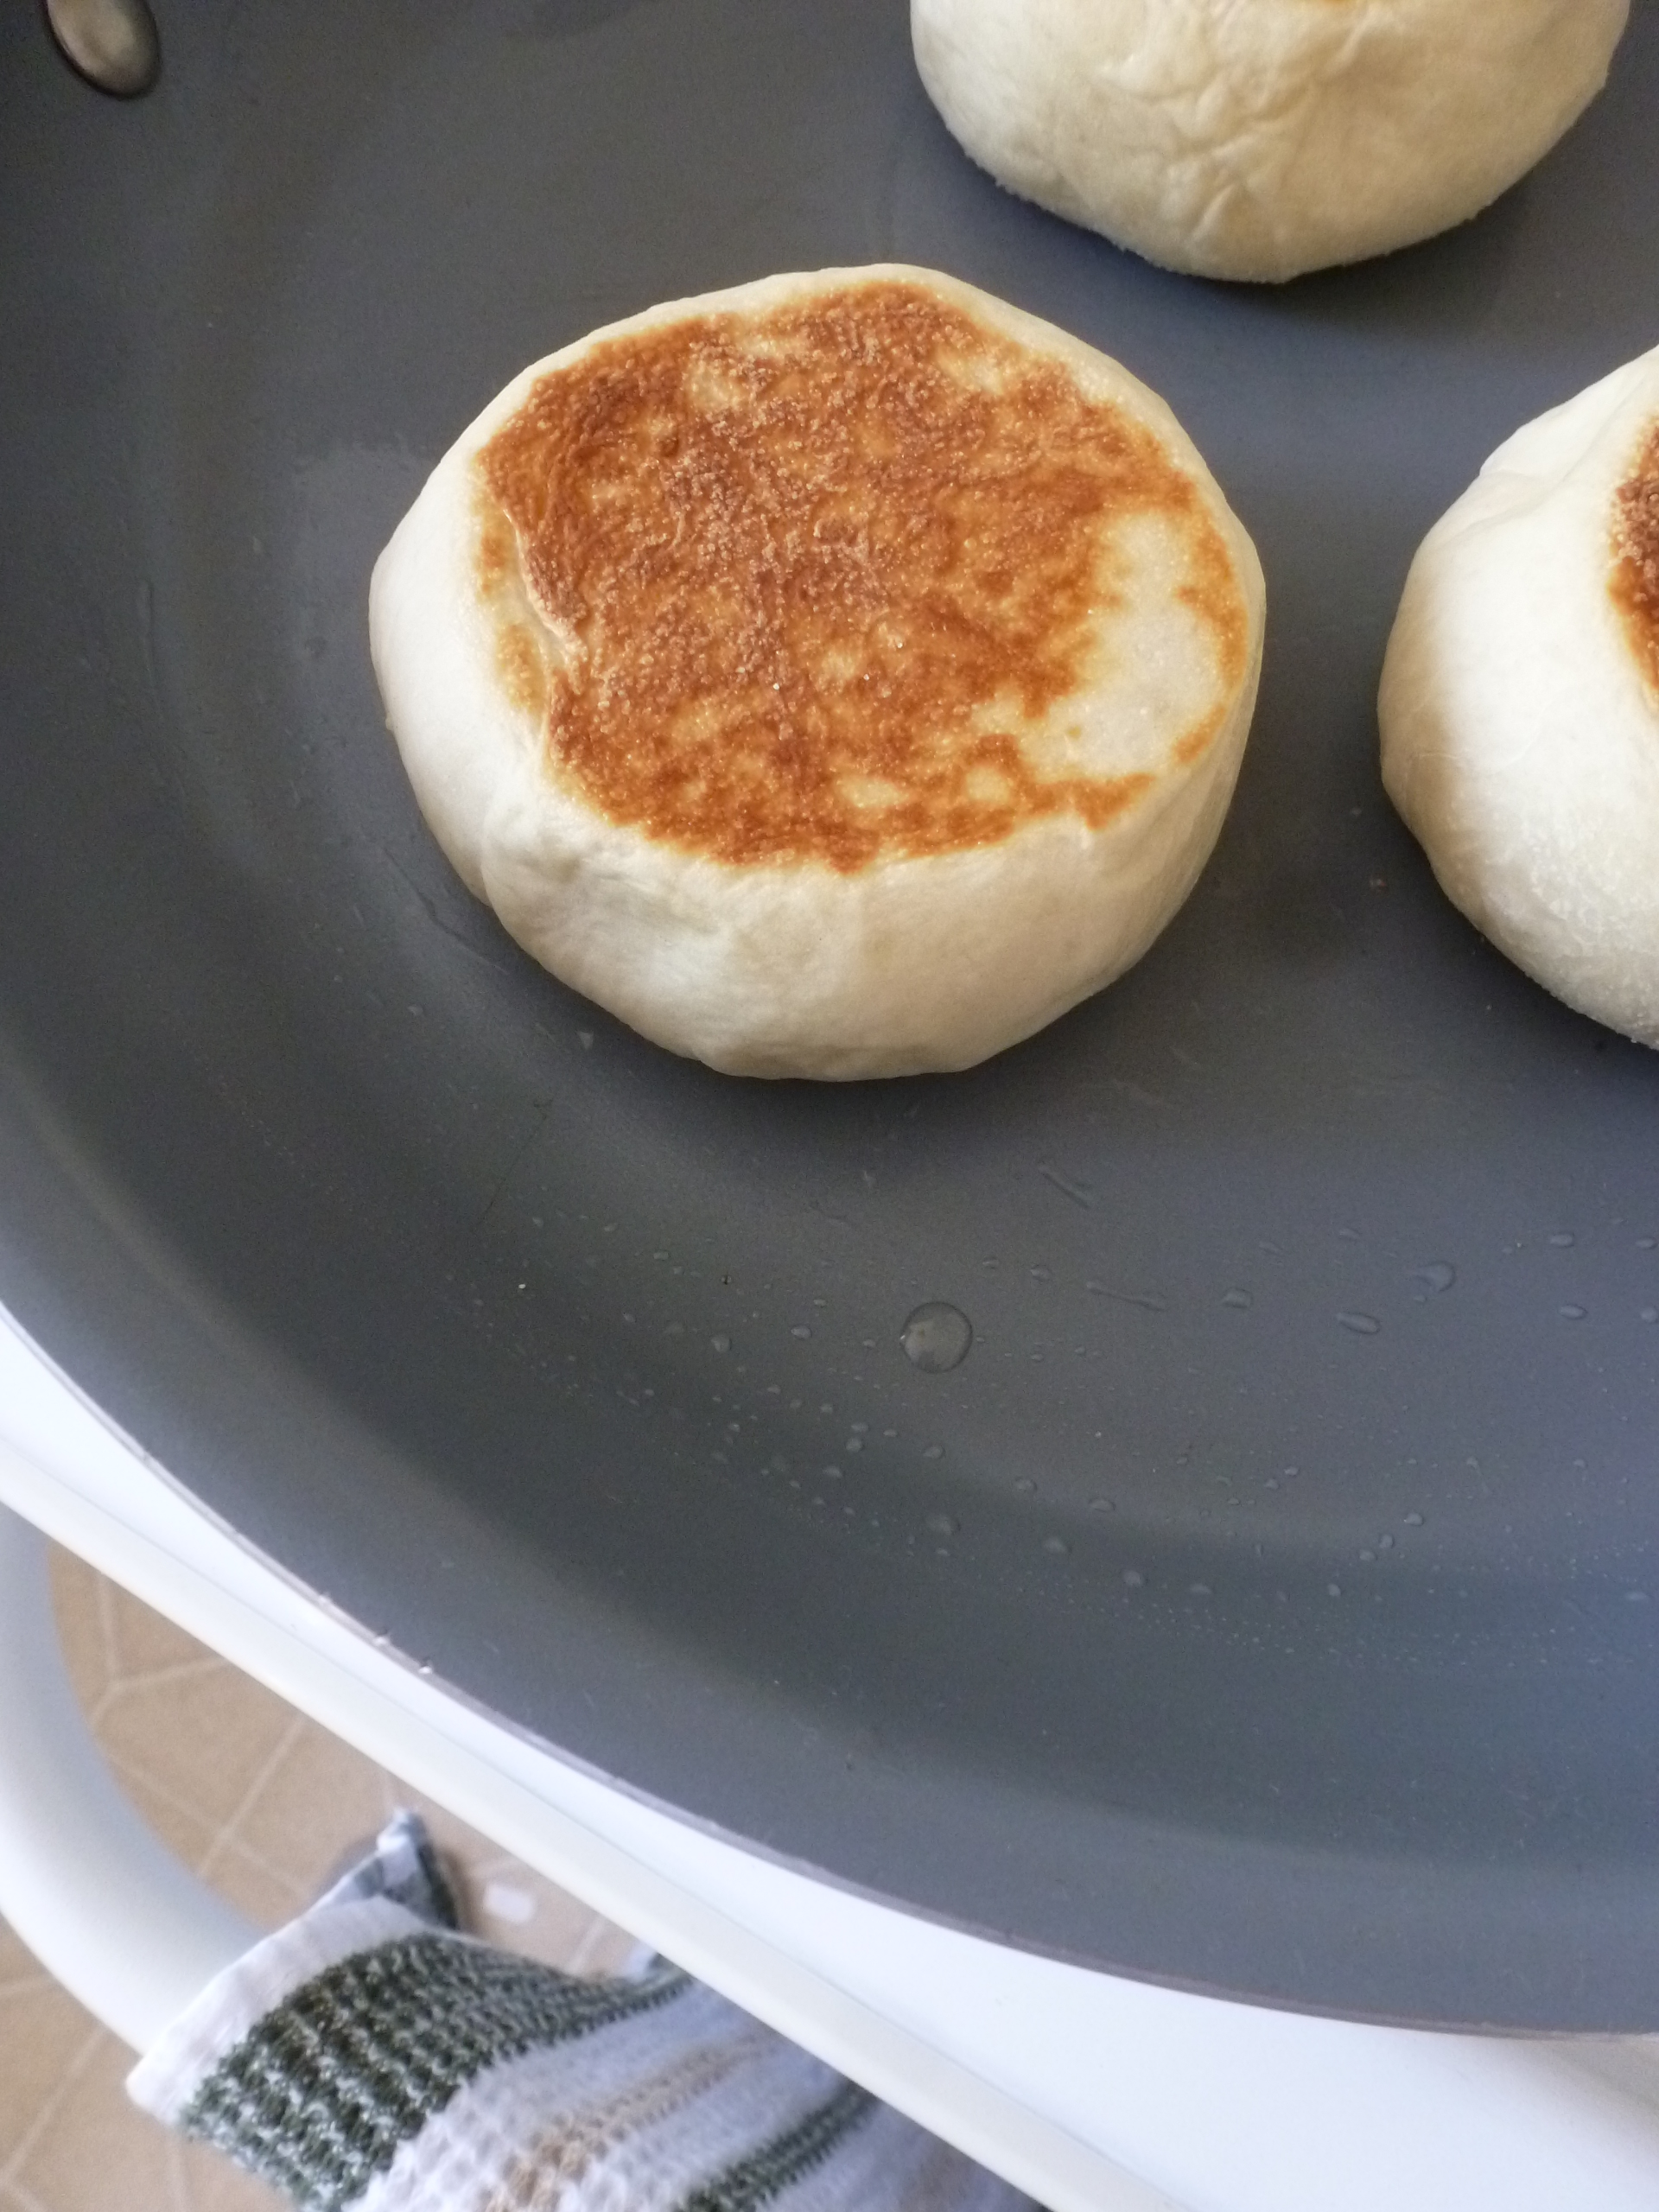 Pan-frying English muffins